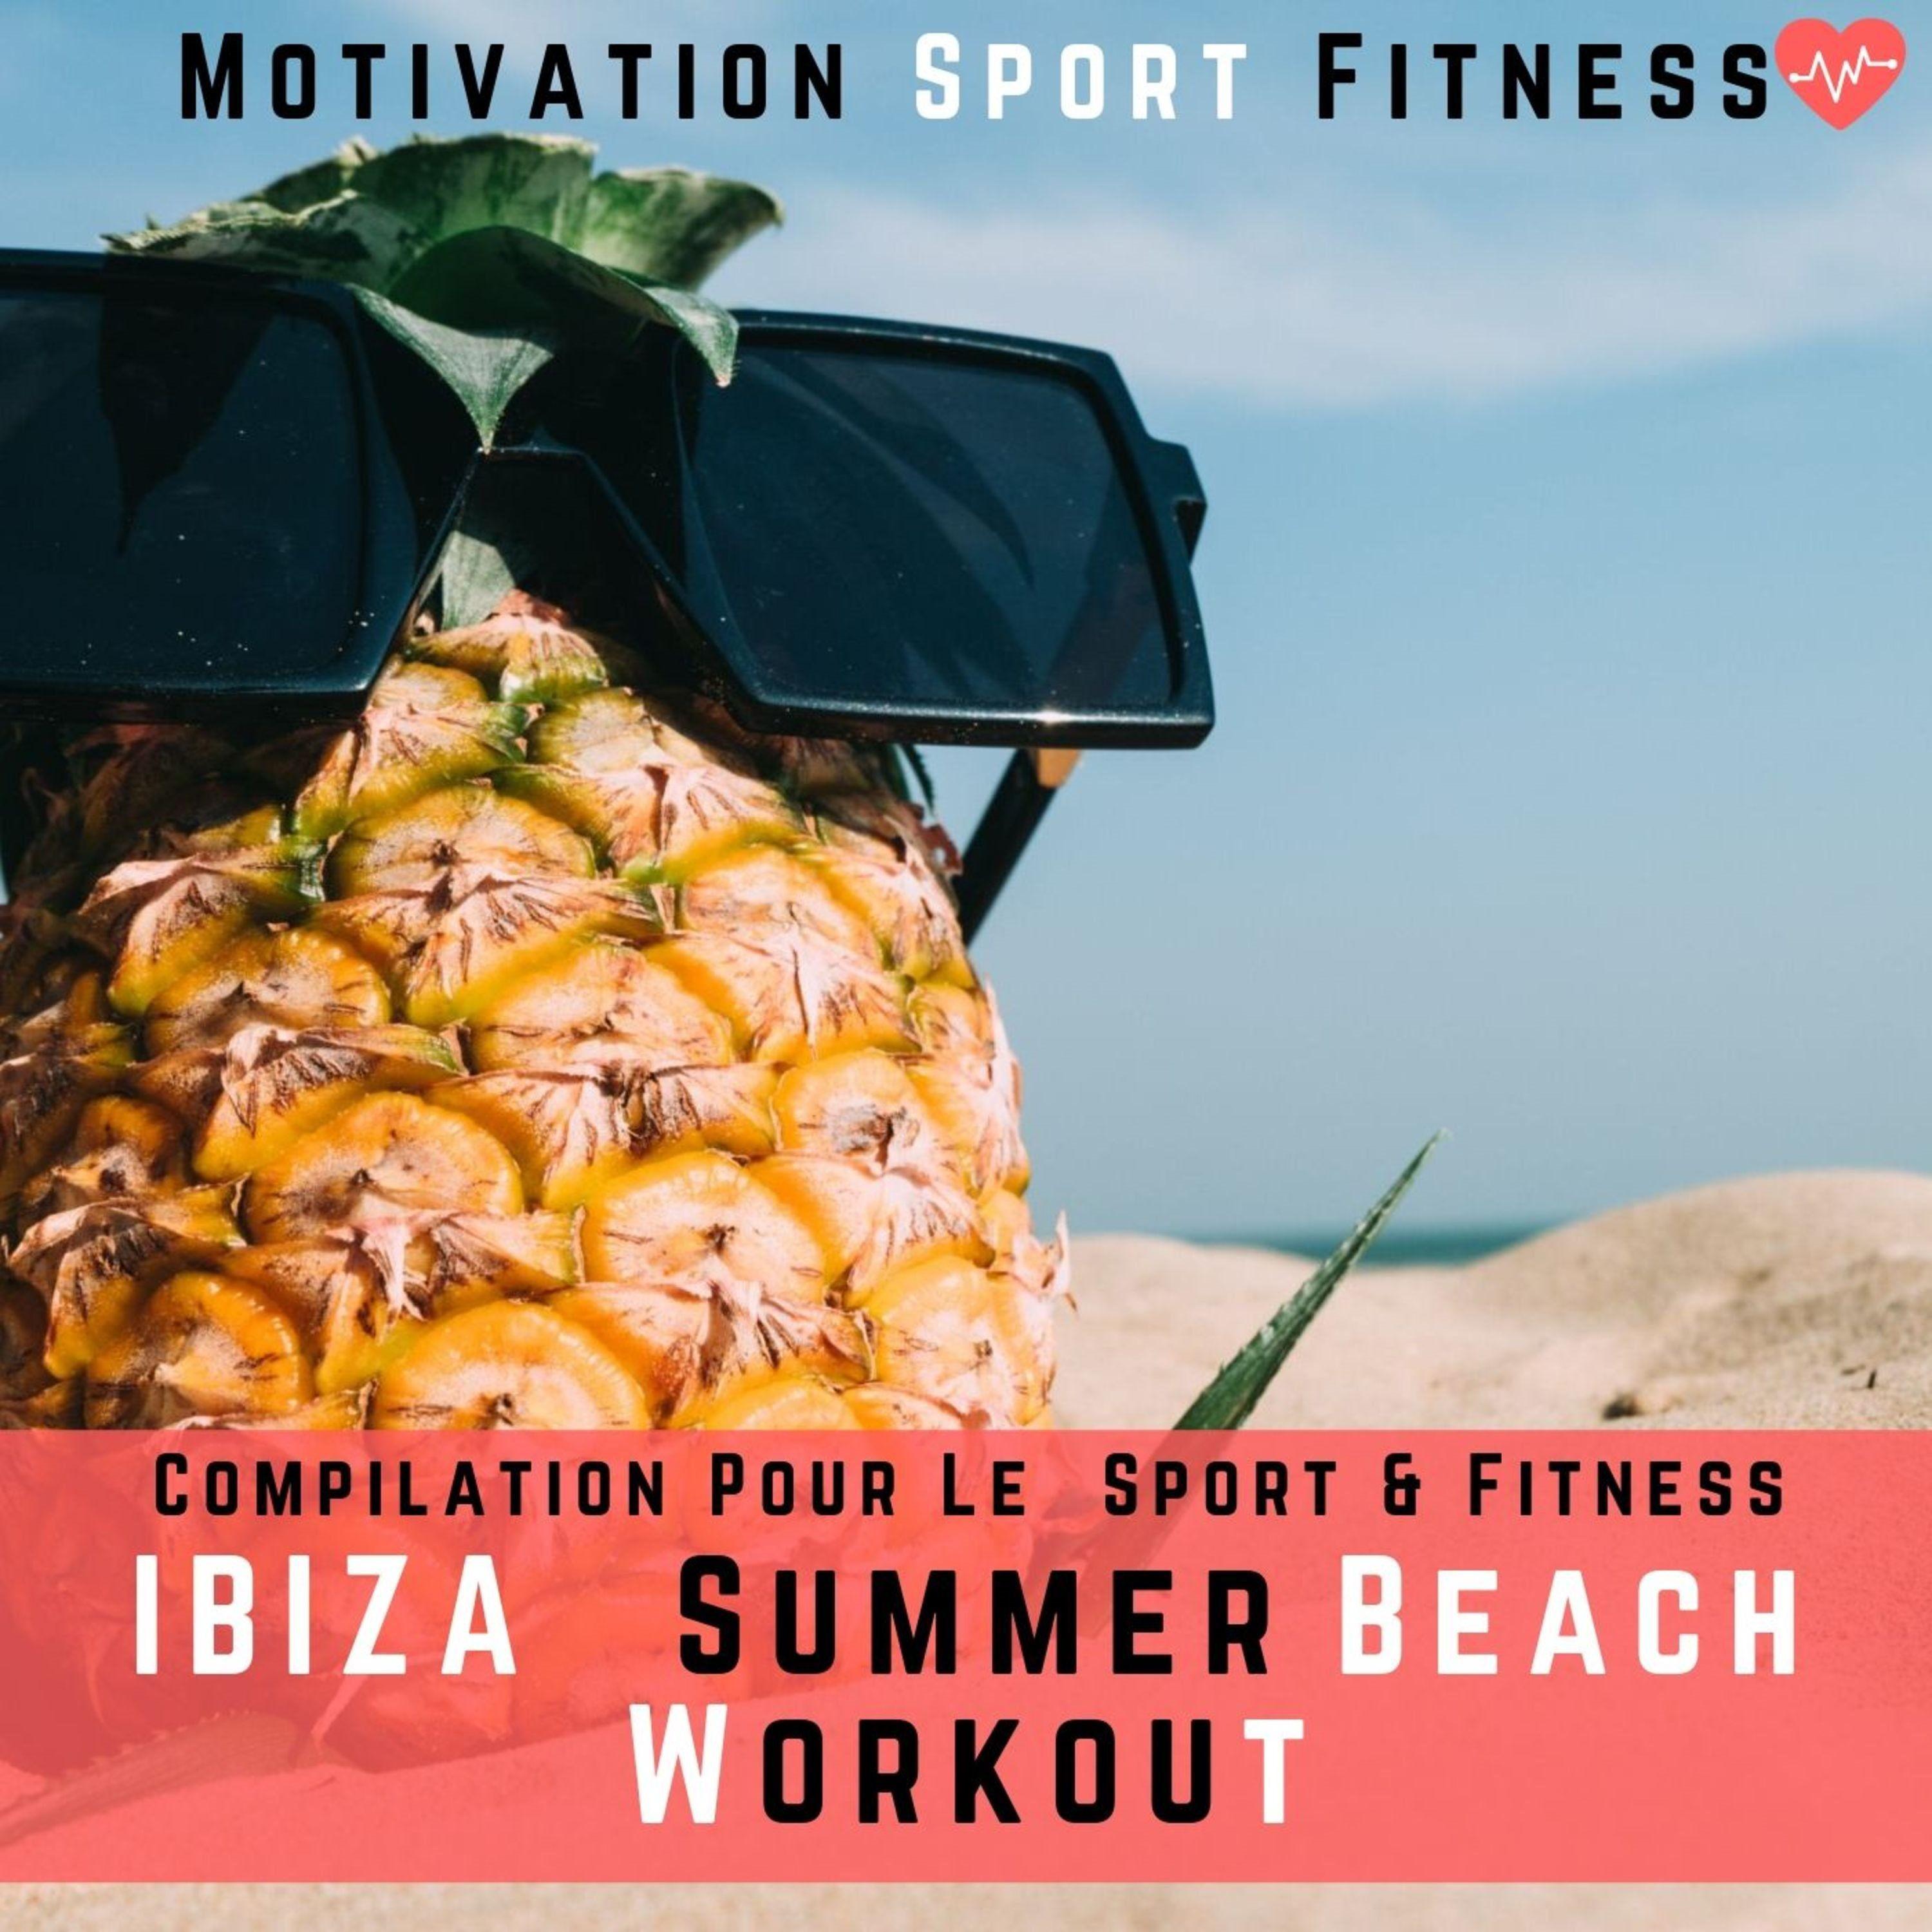 Ibiza Summer Beach Workout (Compilation Pour Le Sport & Fitness)